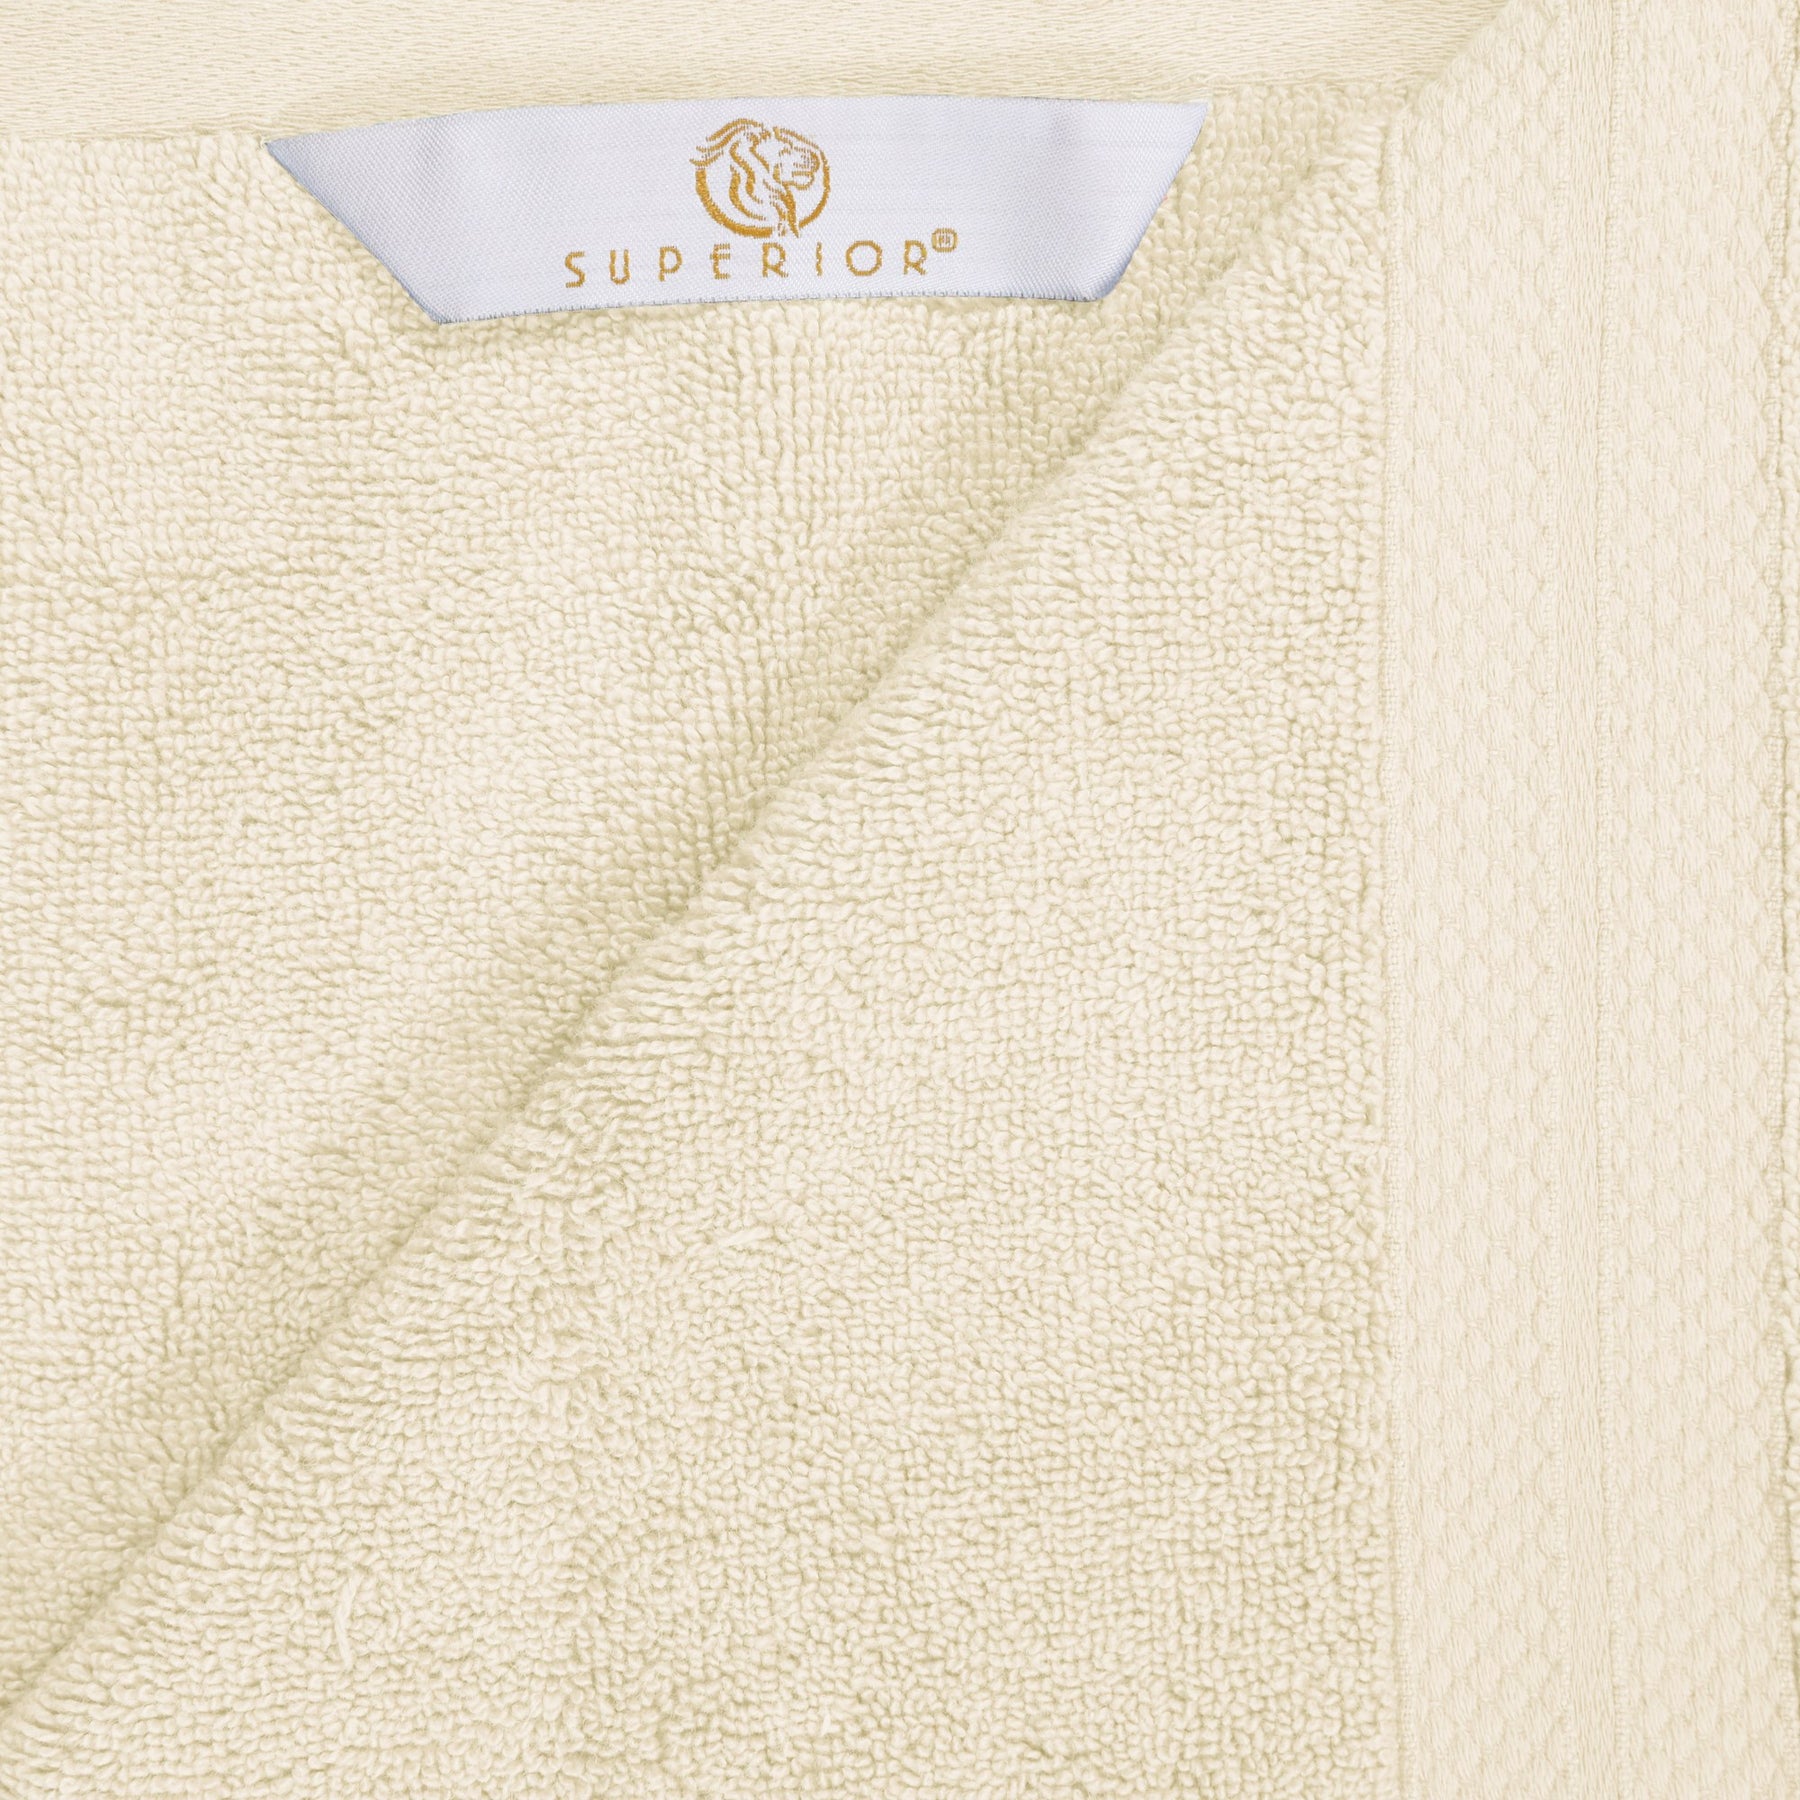 Superior Premium Turkish-Cotton Assorted Towel Set - Ivory